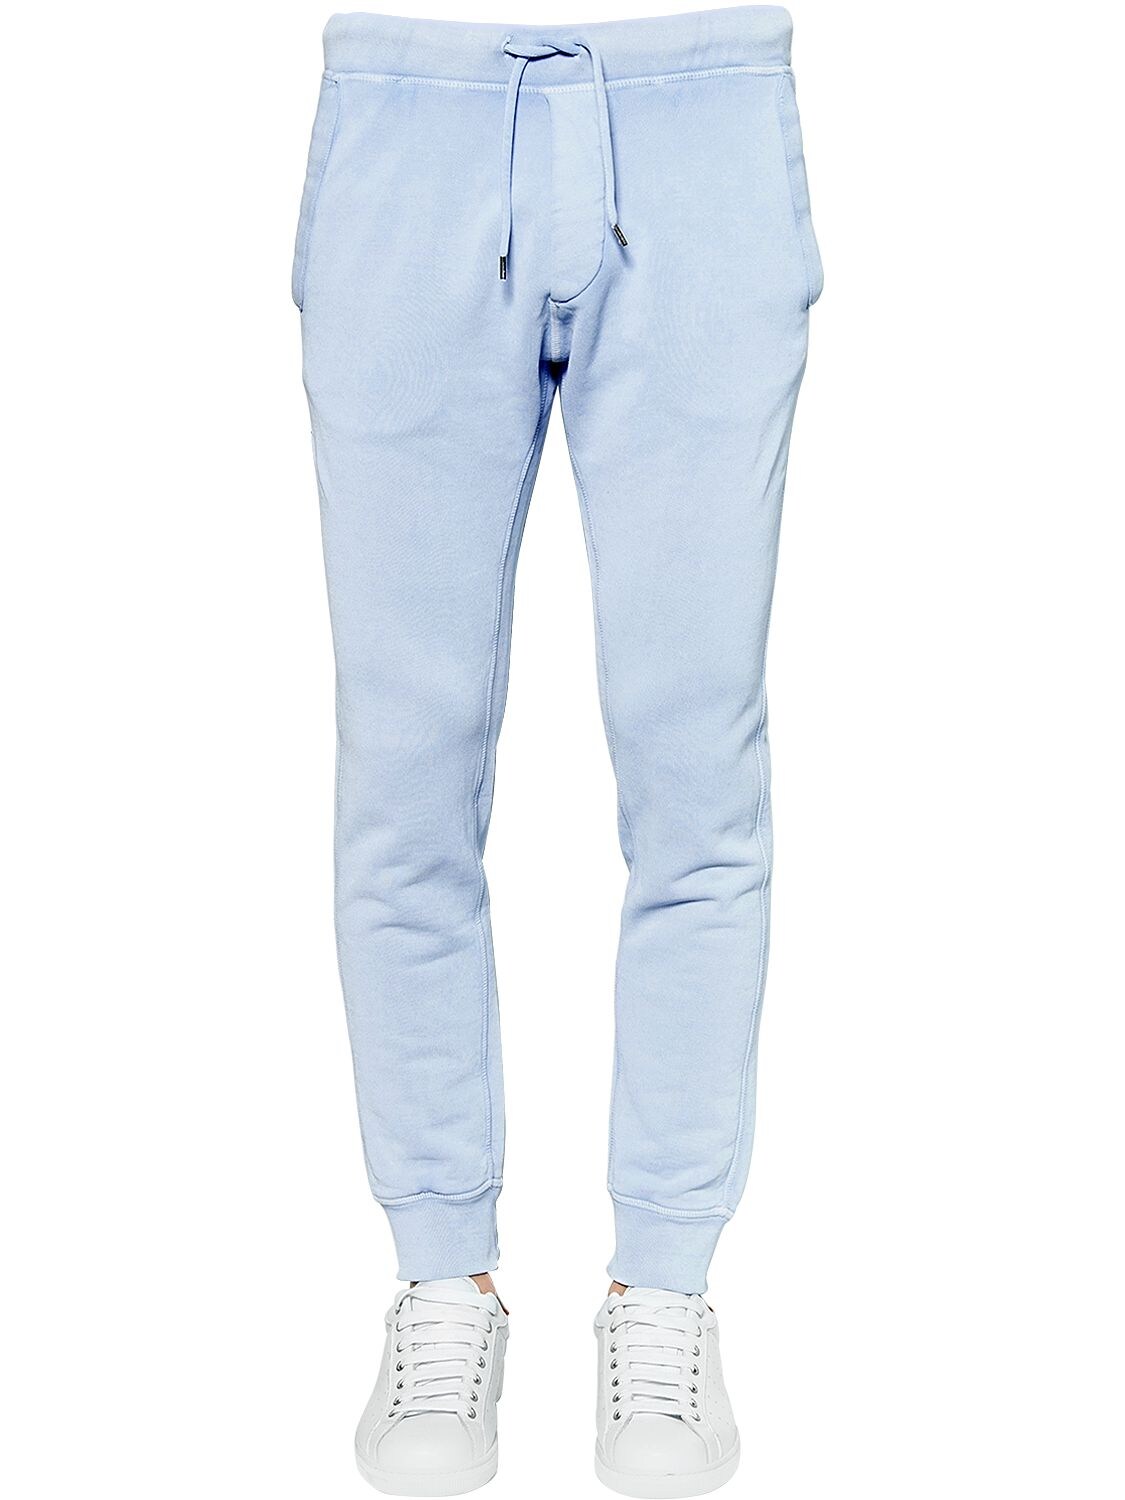 light blue sweatpants